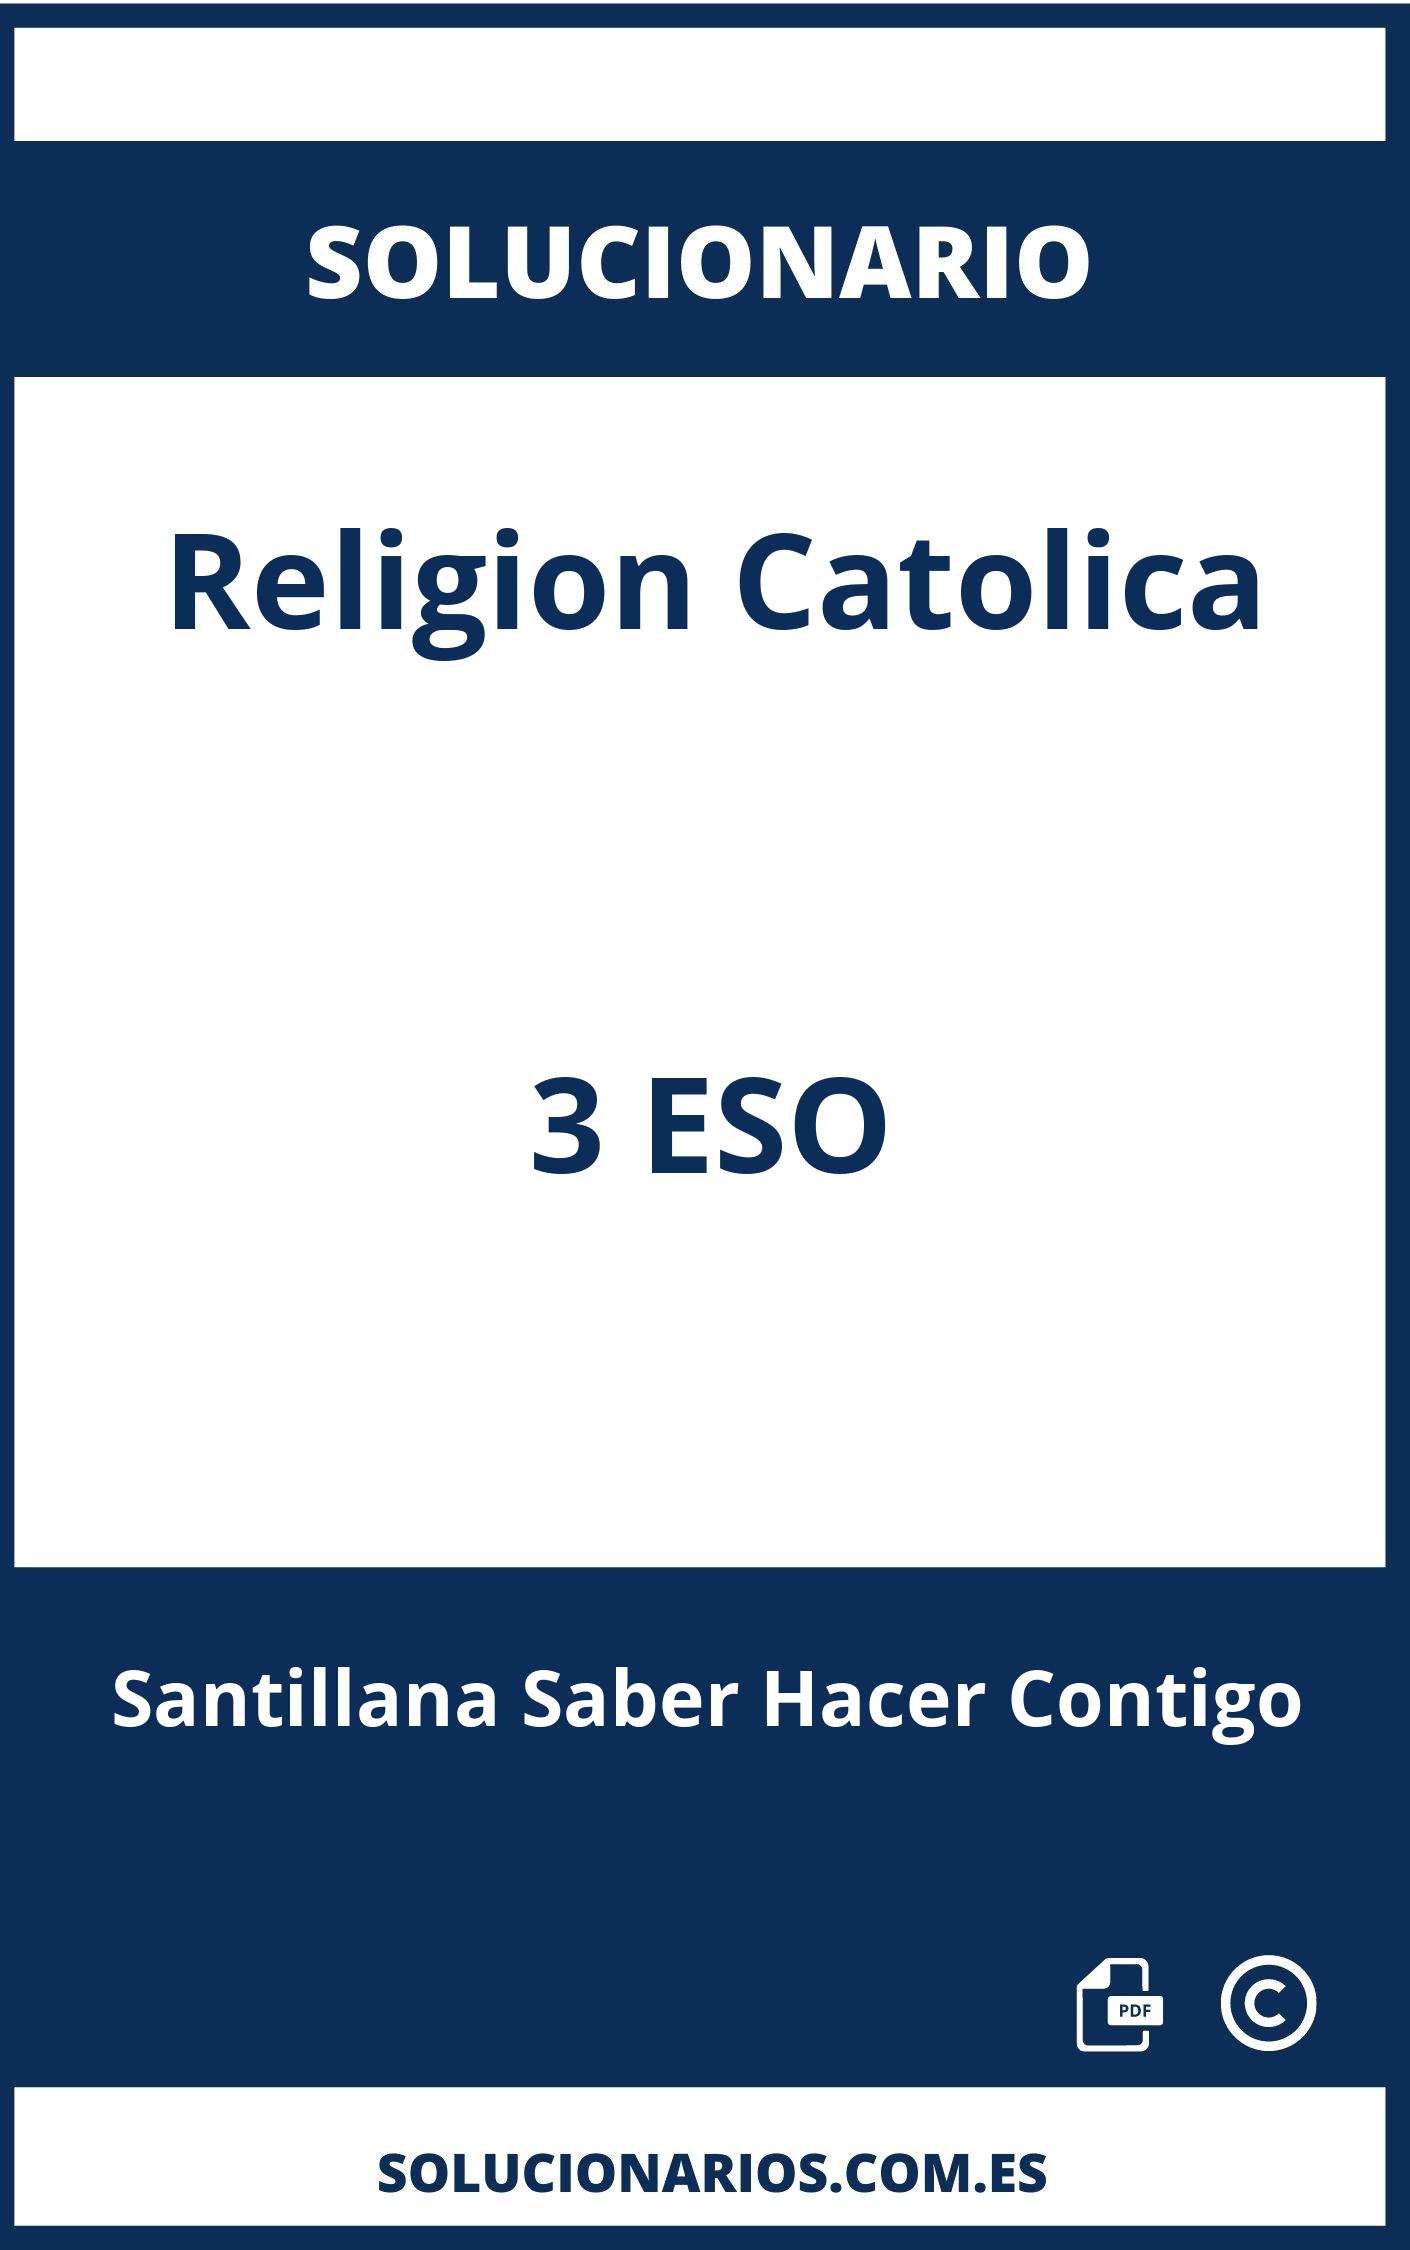 Solucionario Religion Catolica 3 ESO Santillana Saber Hacer Contigo